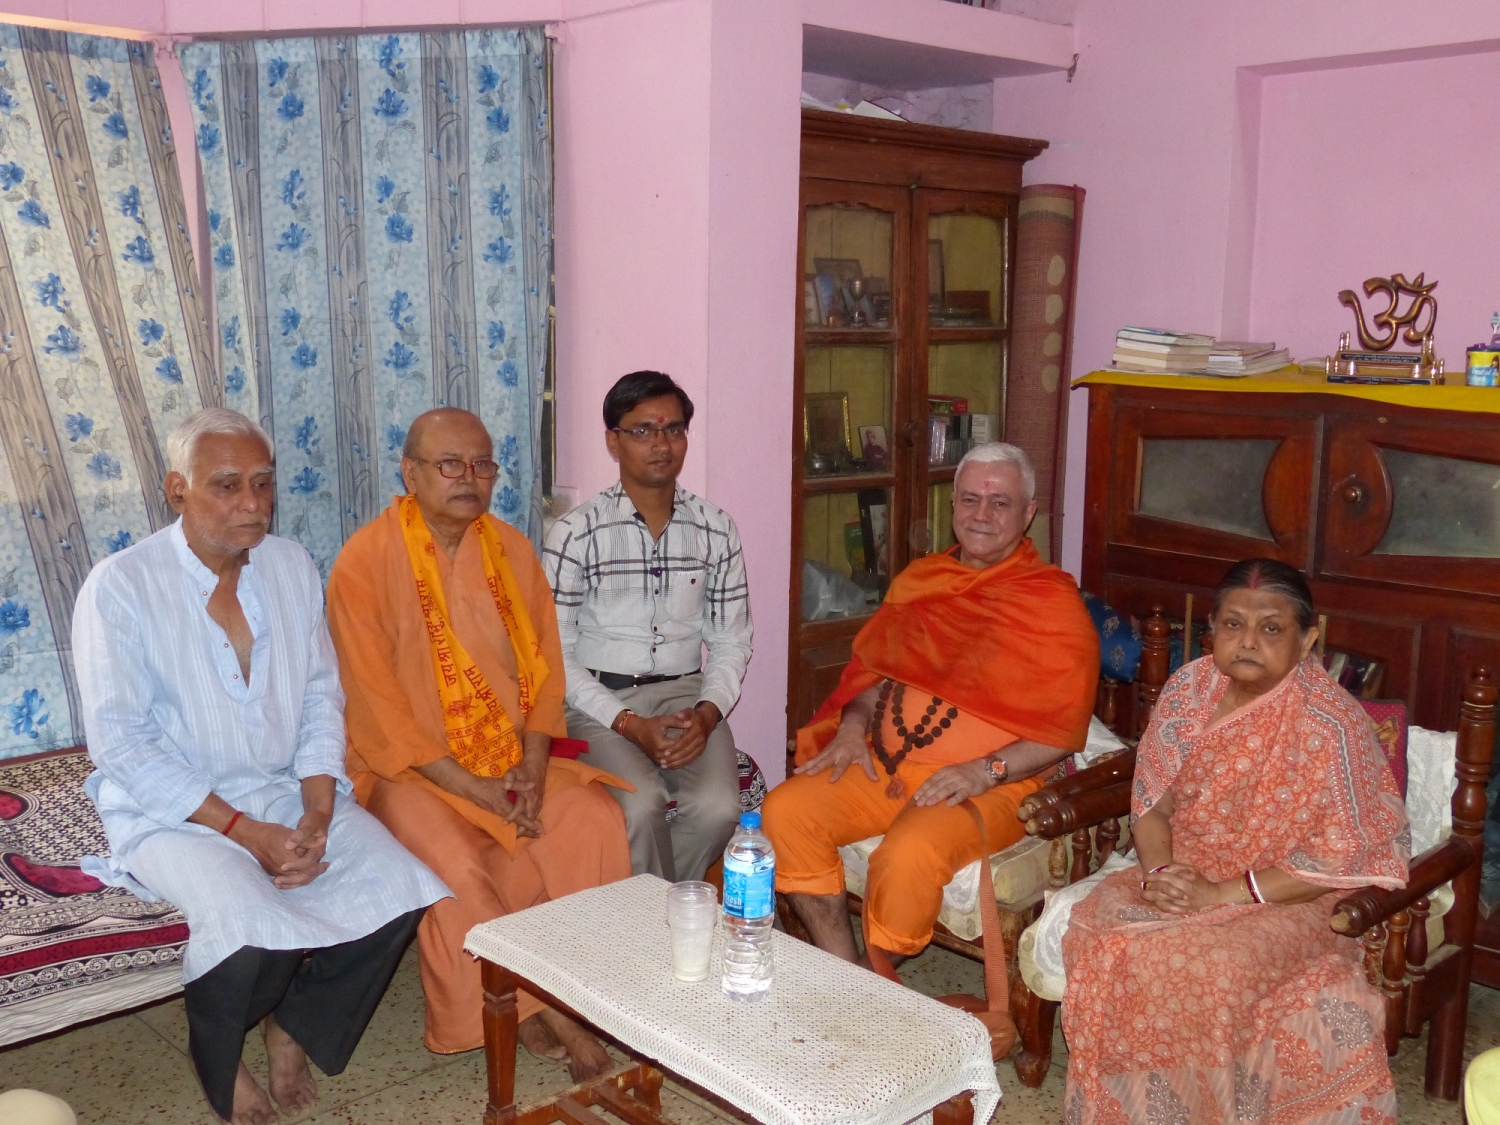 Encontro de H.H. Jagat Guru Amrta Sūryānanda Mahā Rāja com Svámin Malgalteertam - Dehogar, Índia - 2016, Maio